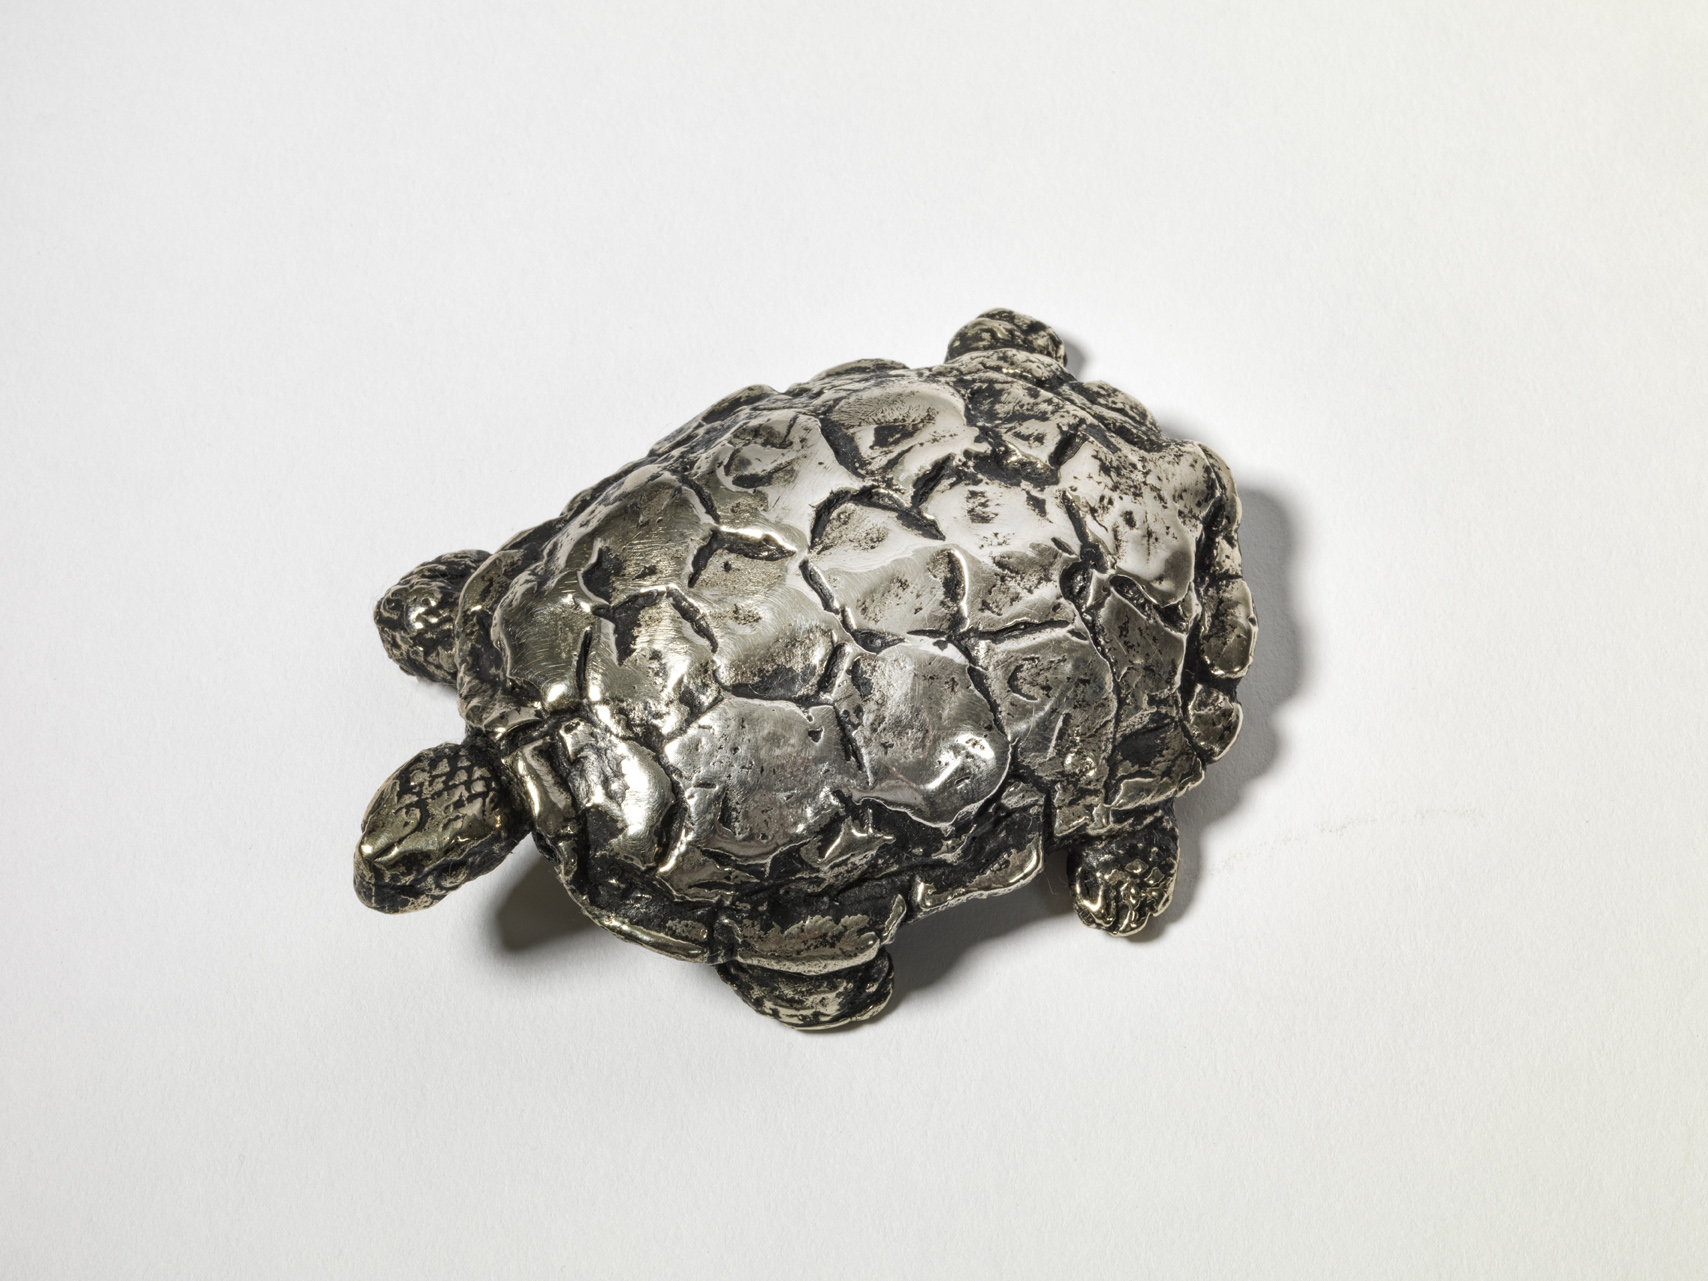 Baby Tortoise, Nickel, 2020